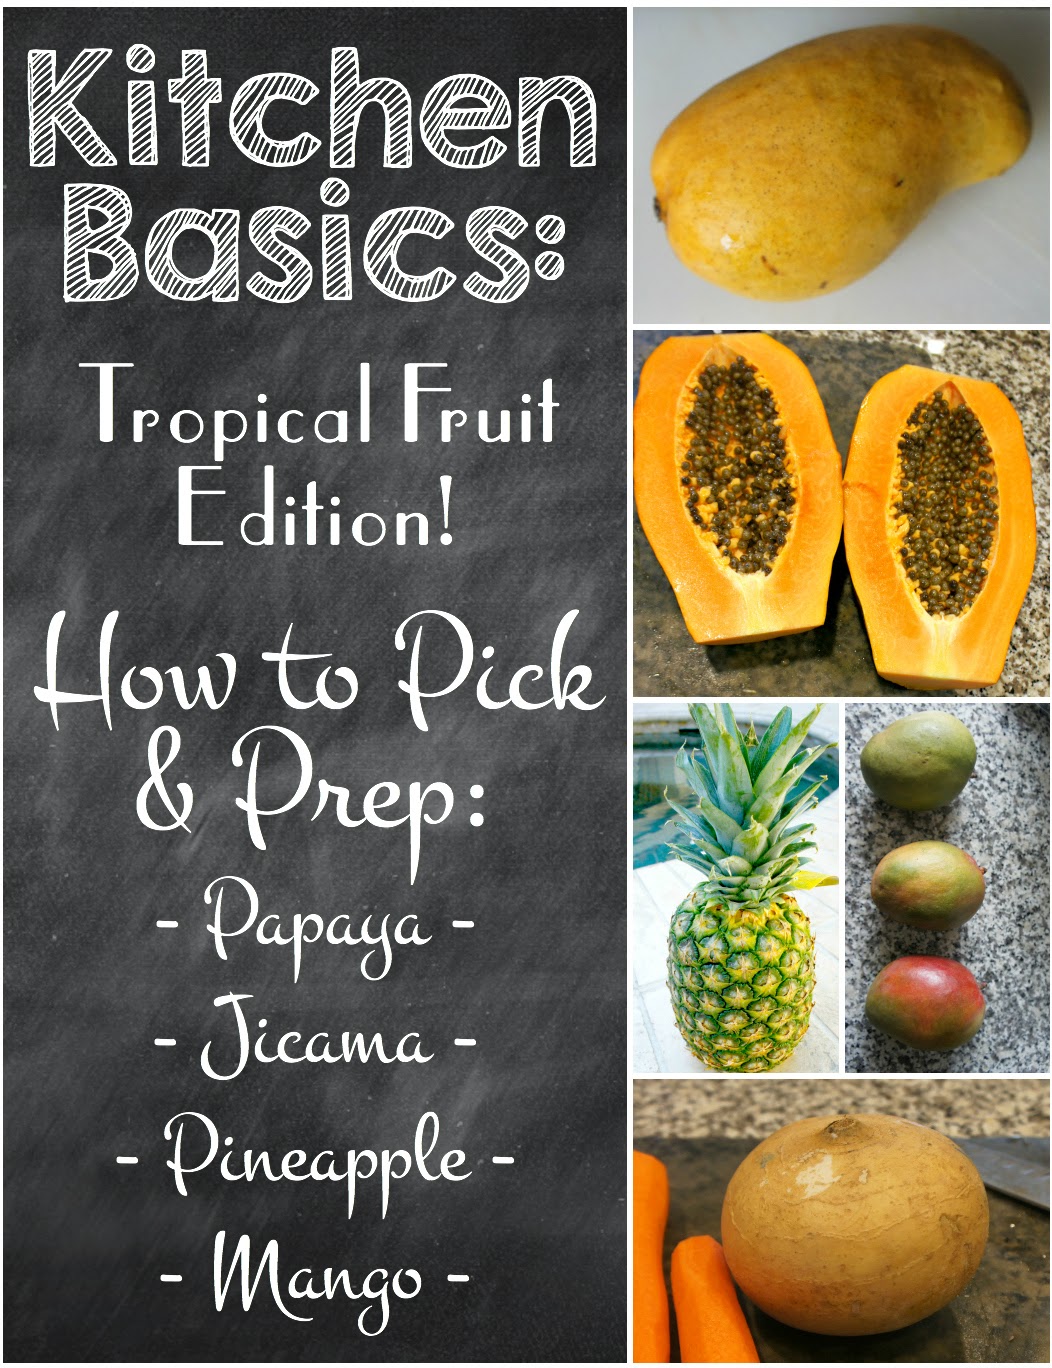 http://4.bp.blogspot.com/-k4xLHKBB1fs/U5frCjC_X7I/AAAAAAAAKlA/AKwCY_zL31w/s1600/Kitchen+Basics+-+How+to+Select+%2526+Prep+Produce+-+Tropical+Fruit+Edition+%2523shop+%2523fruit+%2523tip+0b.jpg